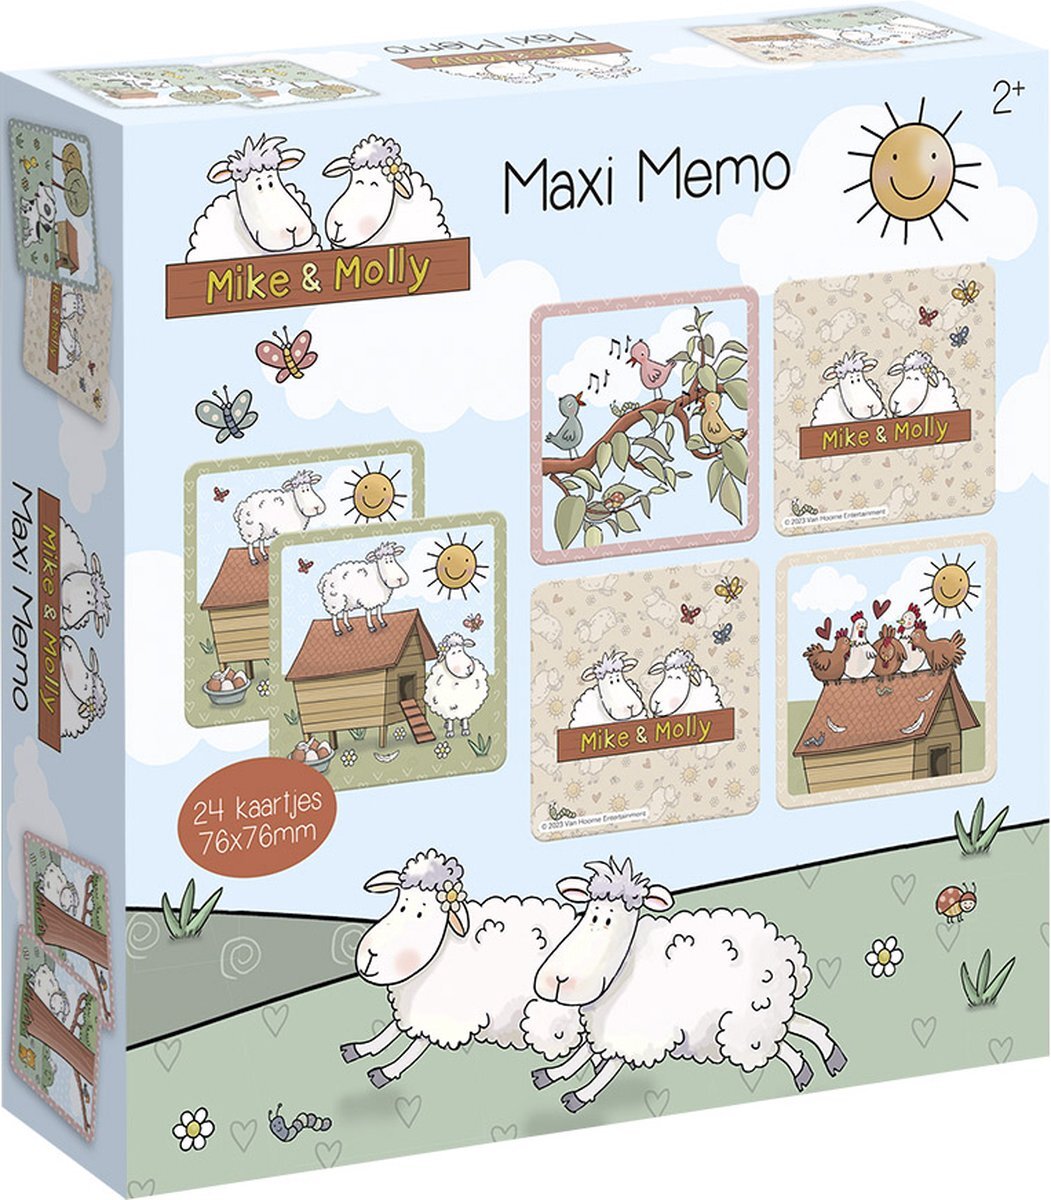 Bambolino Toys - Mike & Molly maxi memo - memory spel met extra grote kaarten - educatief speelgoed - geheugenspel